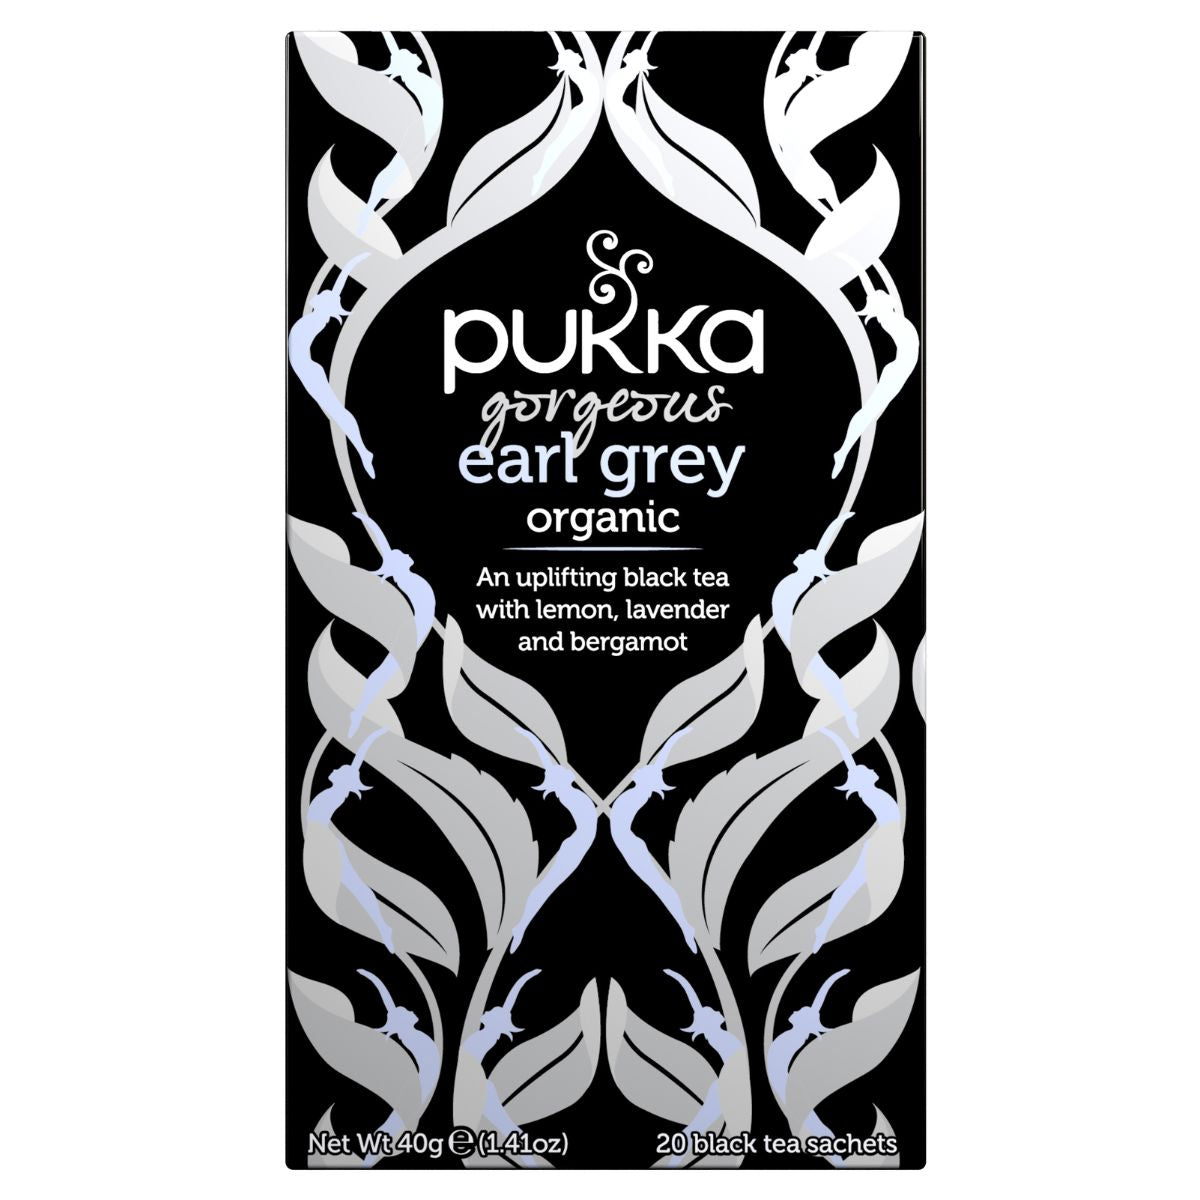 Pukka Gorgeous Earl Grey tea.